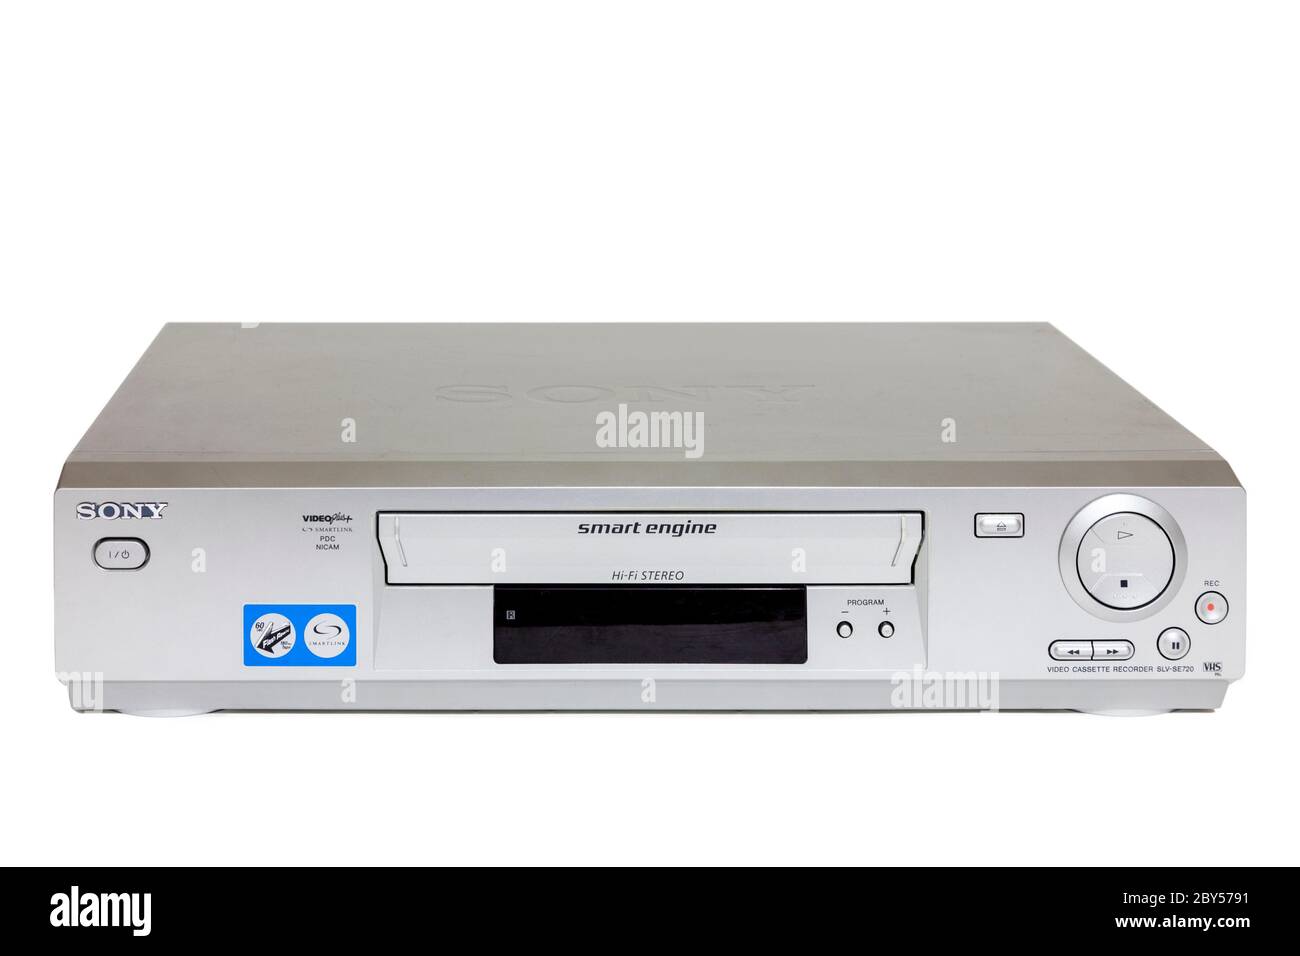 Sony Videokassettenrecorder SLV-SE720, ein späteres Modell des VCR im VHS-Format mit Video Plus und NICAM Stereo Stockfoto